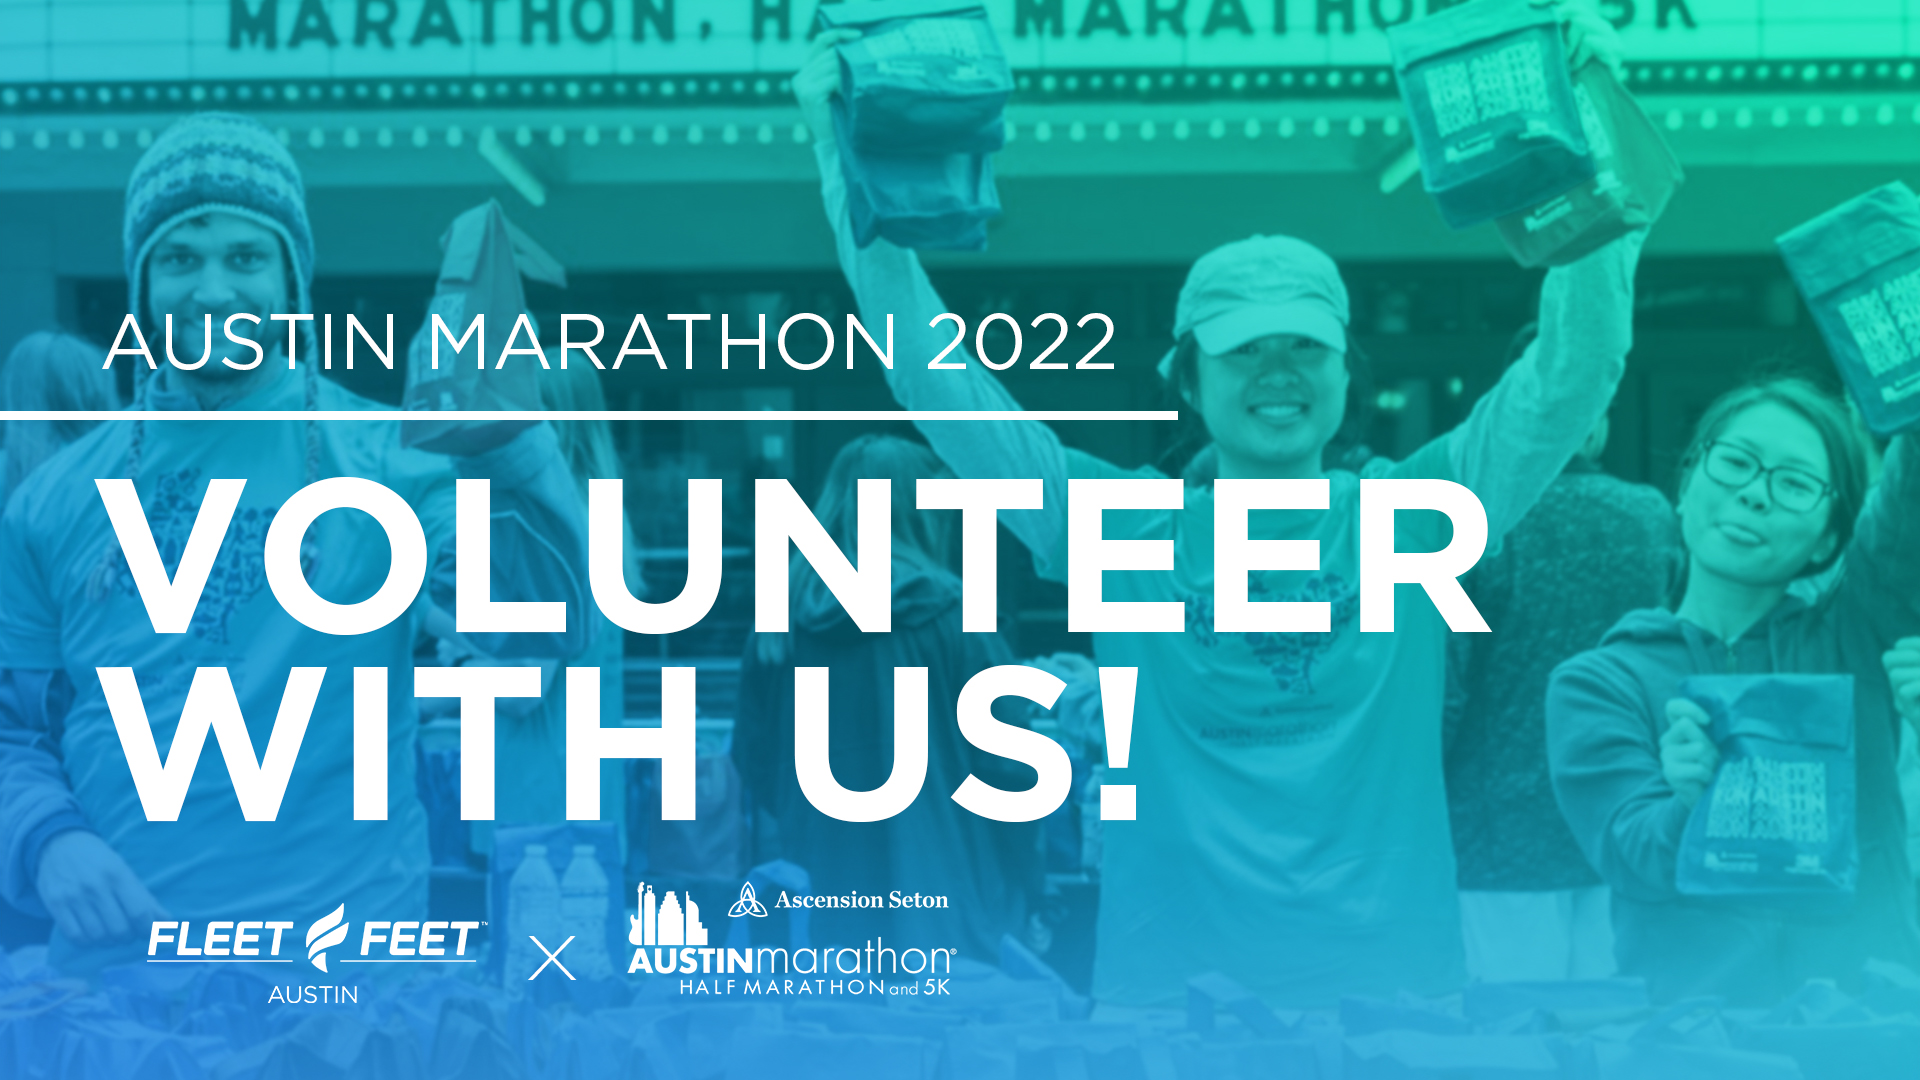 Volunteer for the Austin Marathon! Fleet Feet Austin